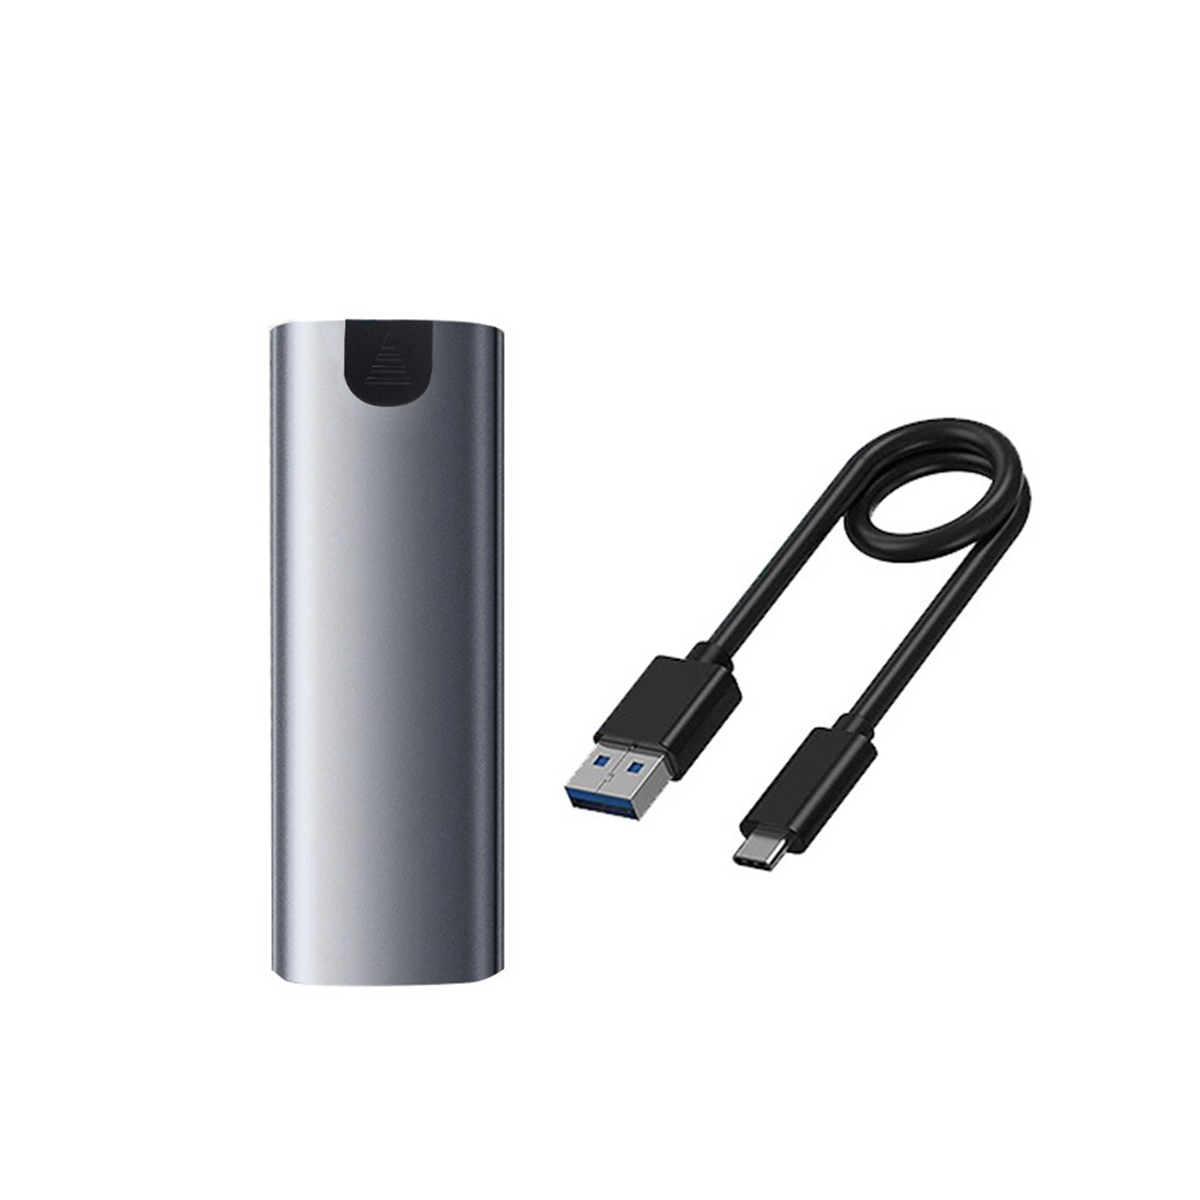 M2 SSD Case NGFF SATA to USB 3.1 Gen 2 5Gbps for NGFF SATA B Key B+M Key